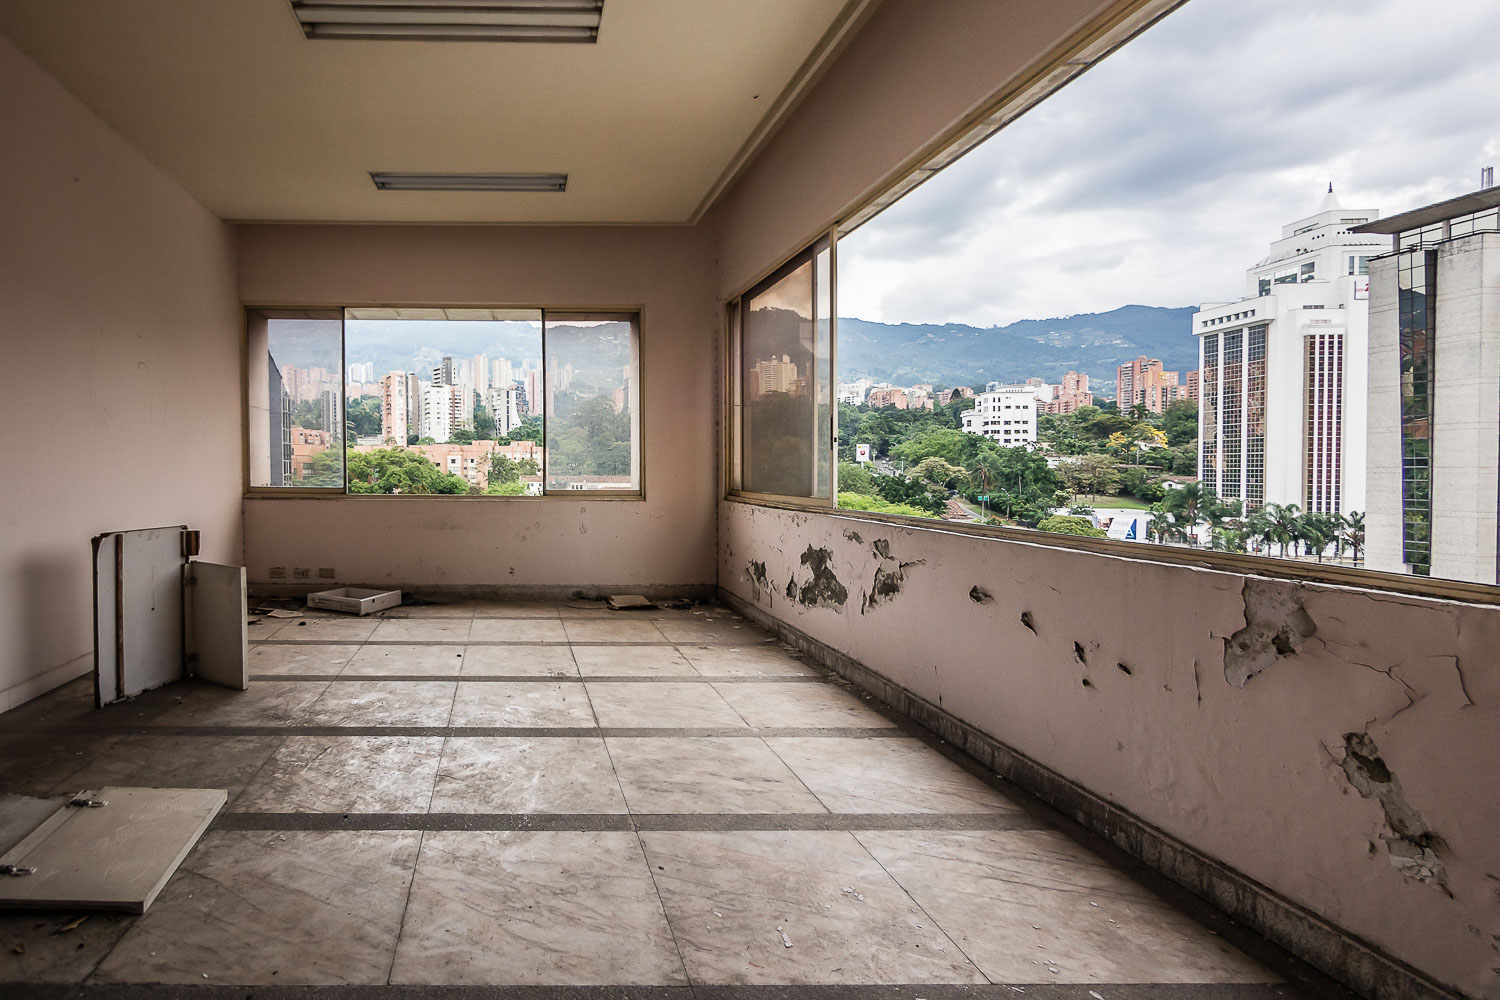 CO151219E-Medellin---the-Monaco-building-once-home-of-Pablo-Esobar.jpg